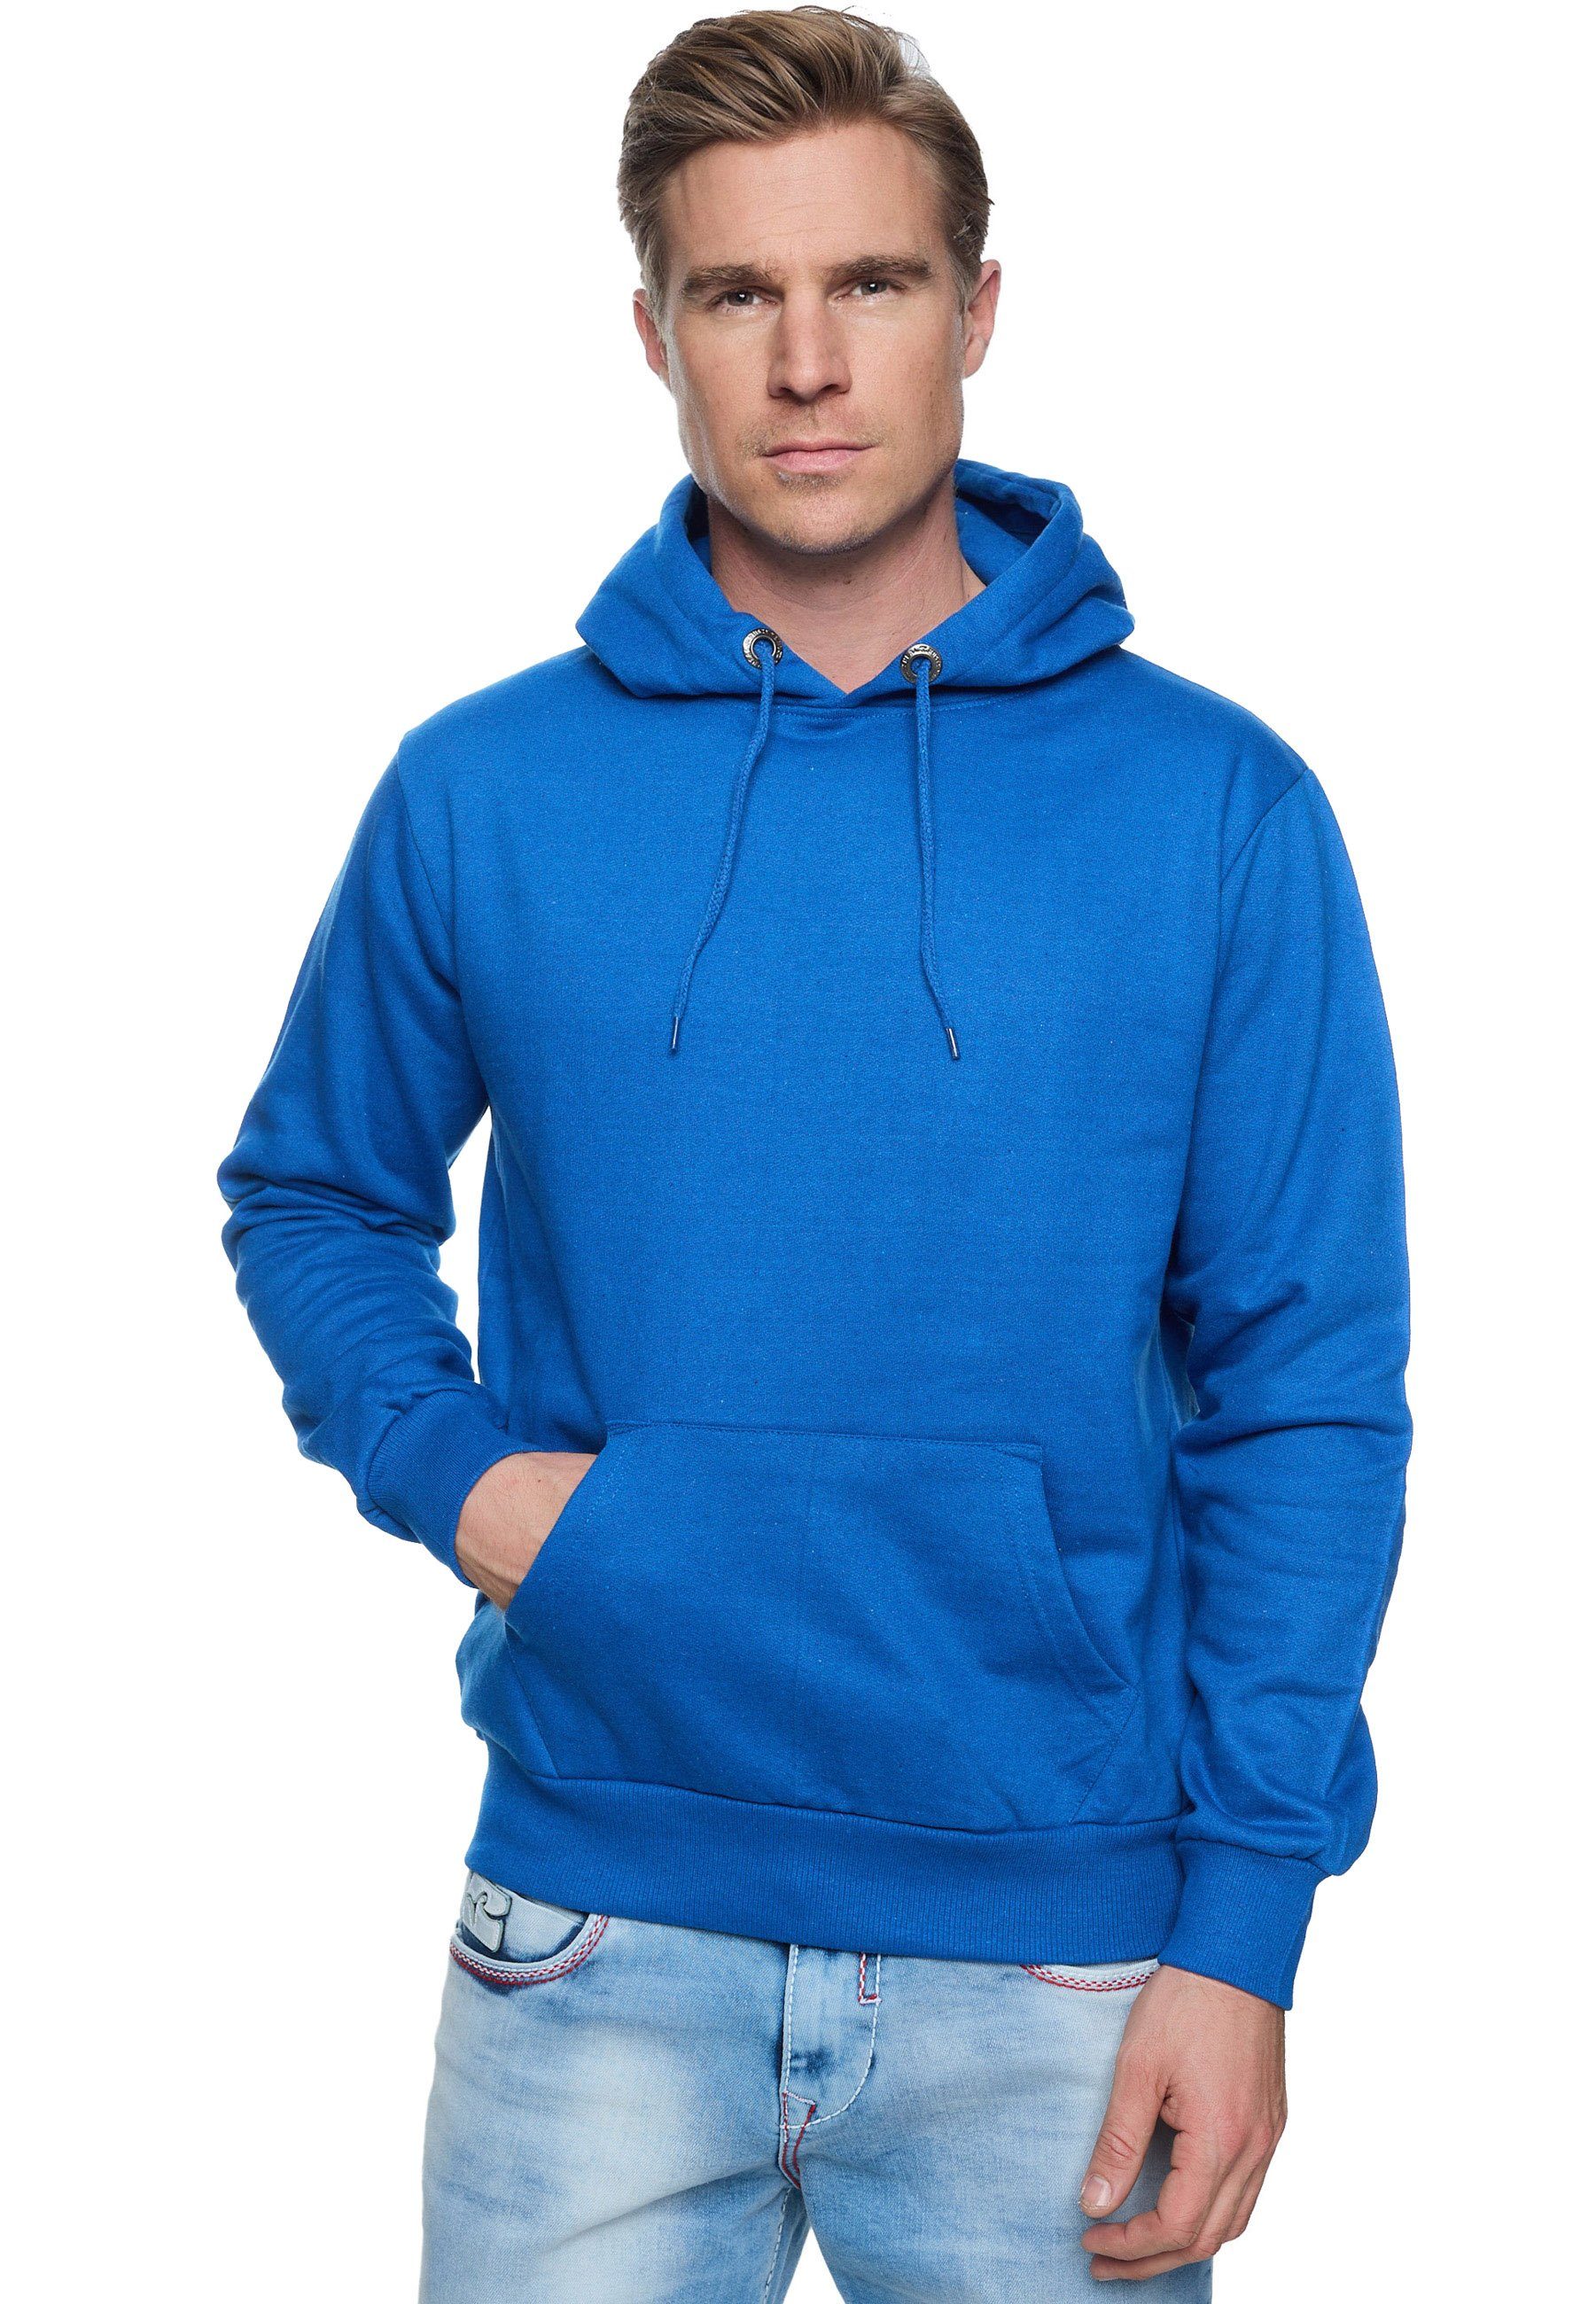 Rusty Neal Kapuzensweatshirt in bequemer Regular Fit-Passform blau | Sweatshirts